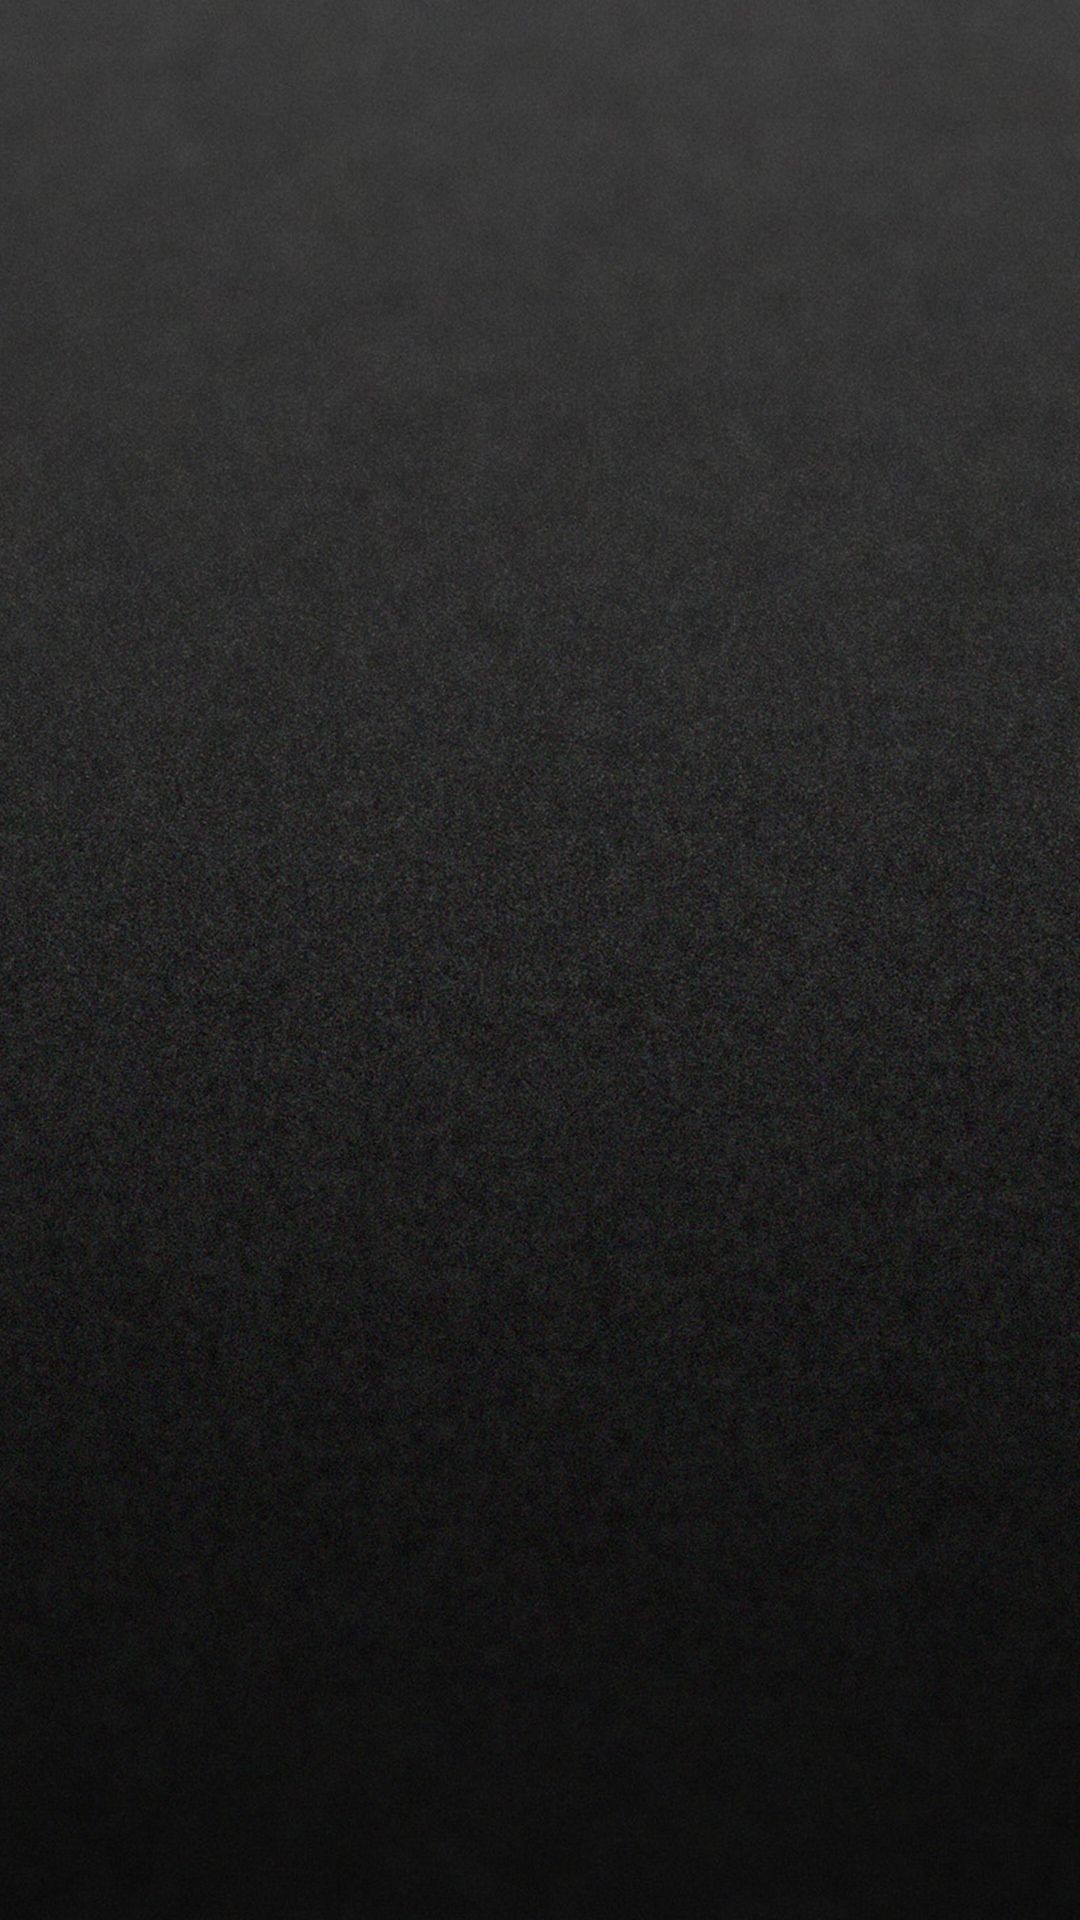 Wallpapers for Galaxy – Carbon Fiber Texture Wallpaper